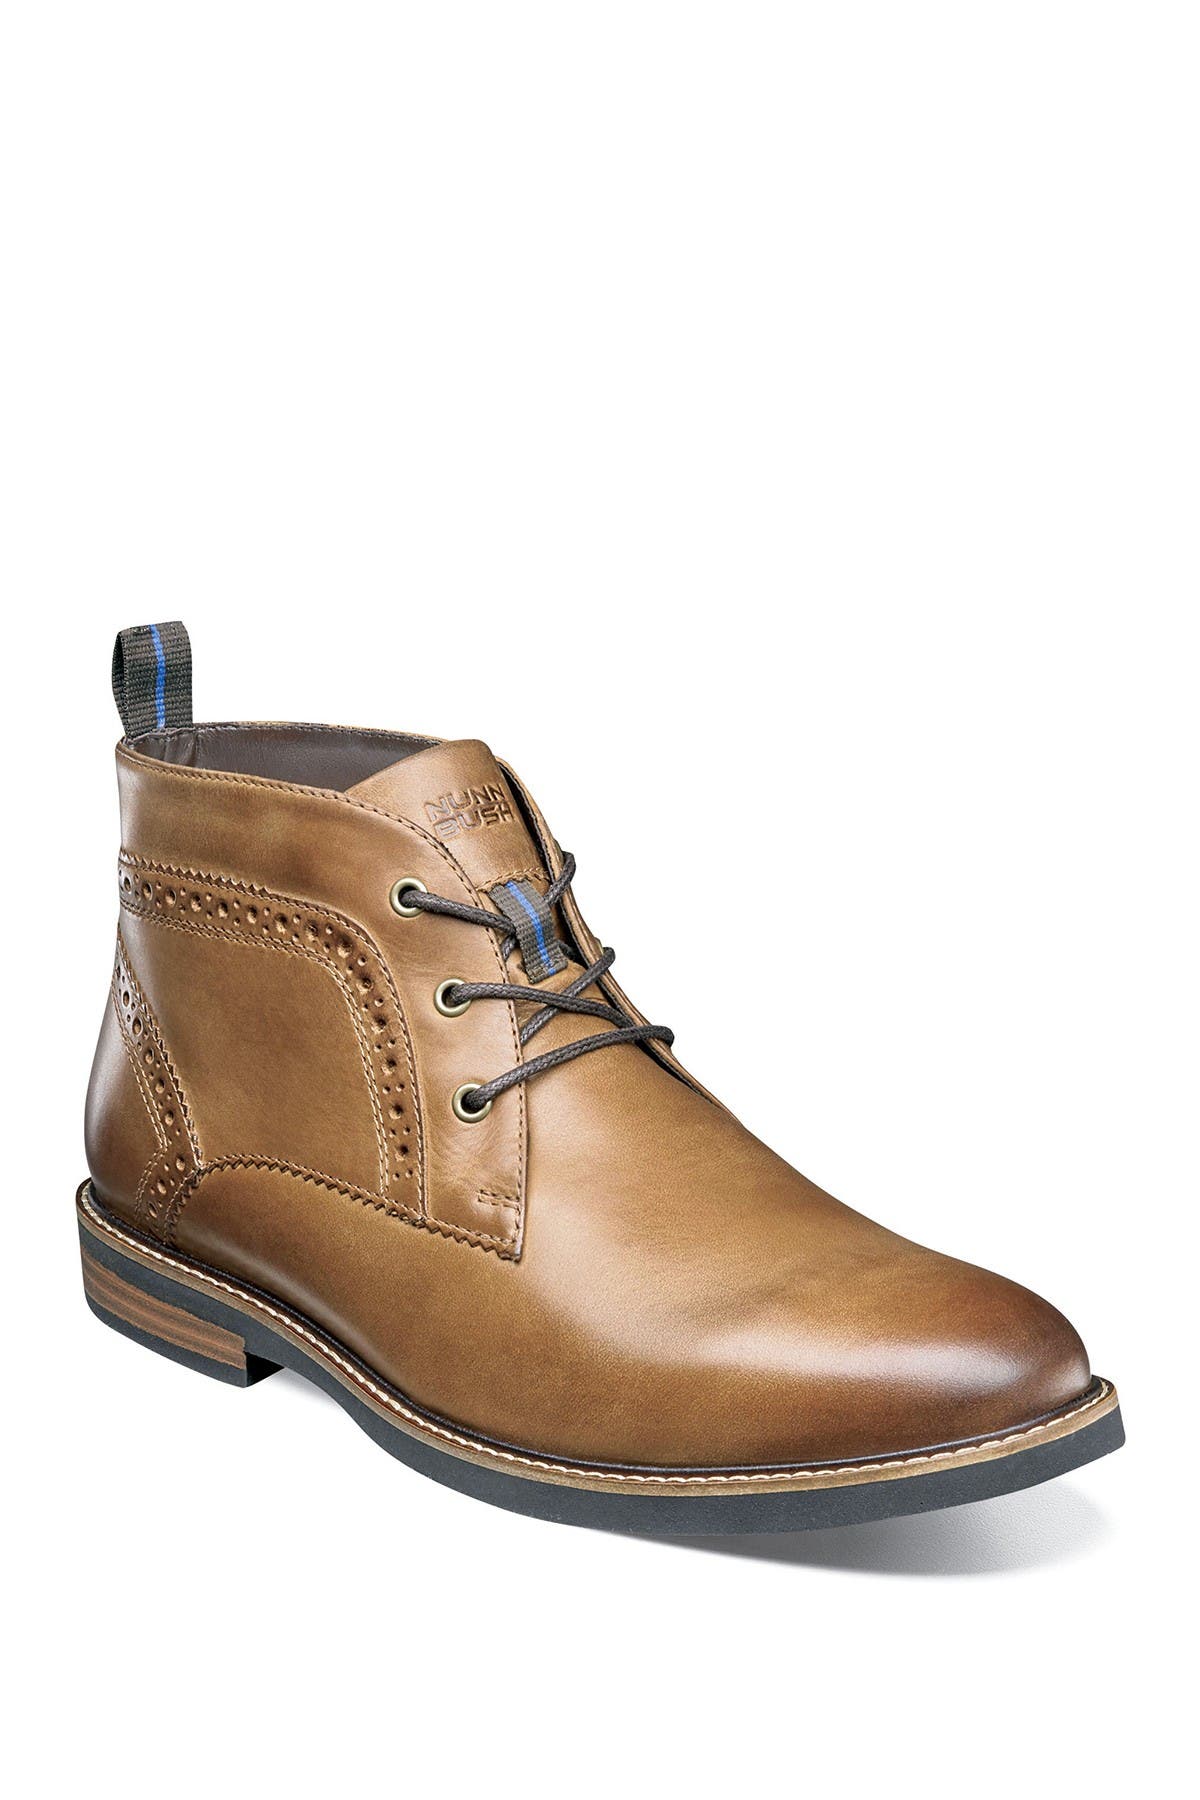 Ozark Leather Plain Toe Chukka Boot 